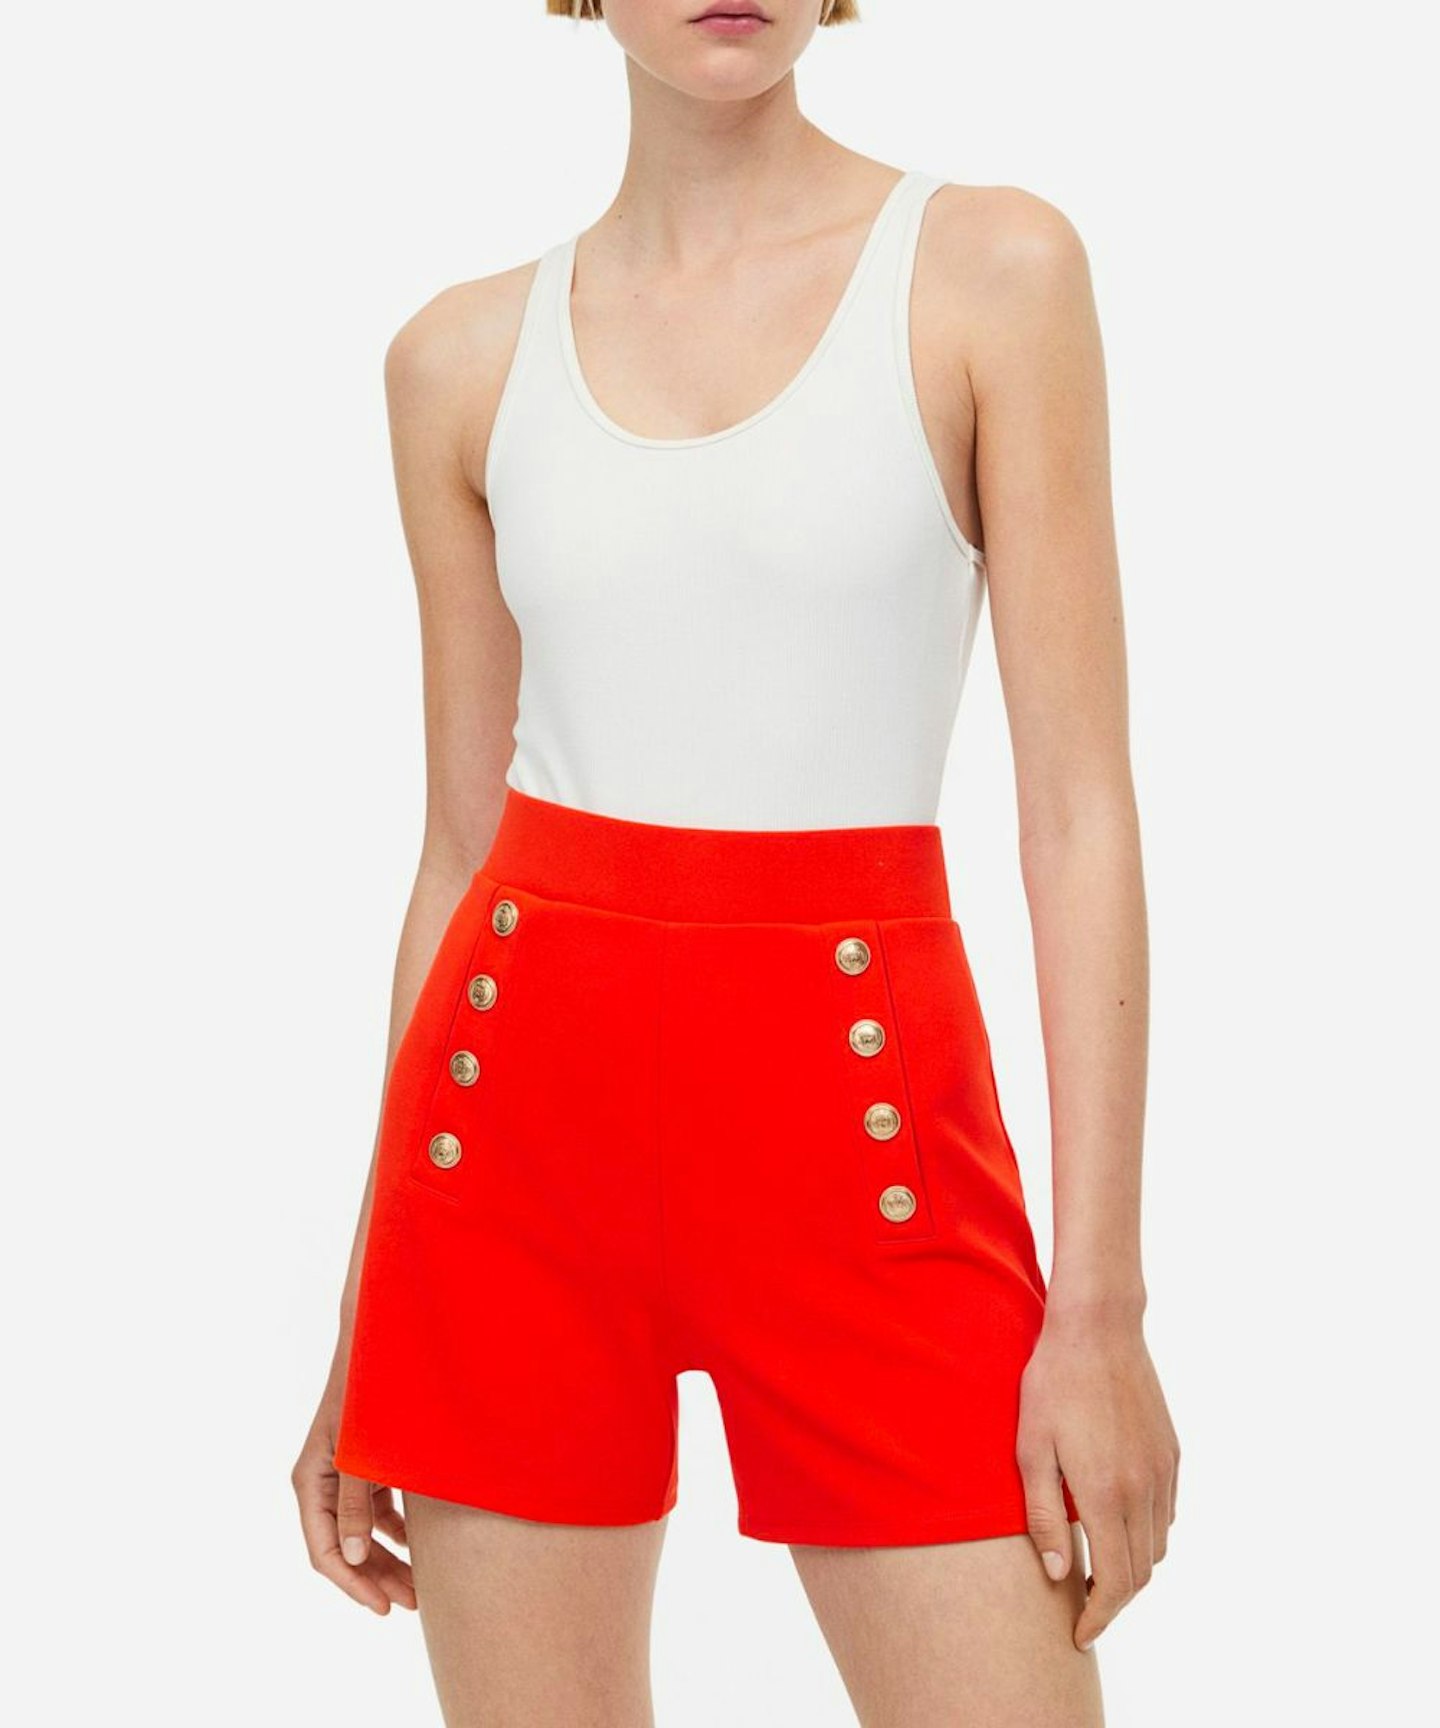 H&M Button-front shorts